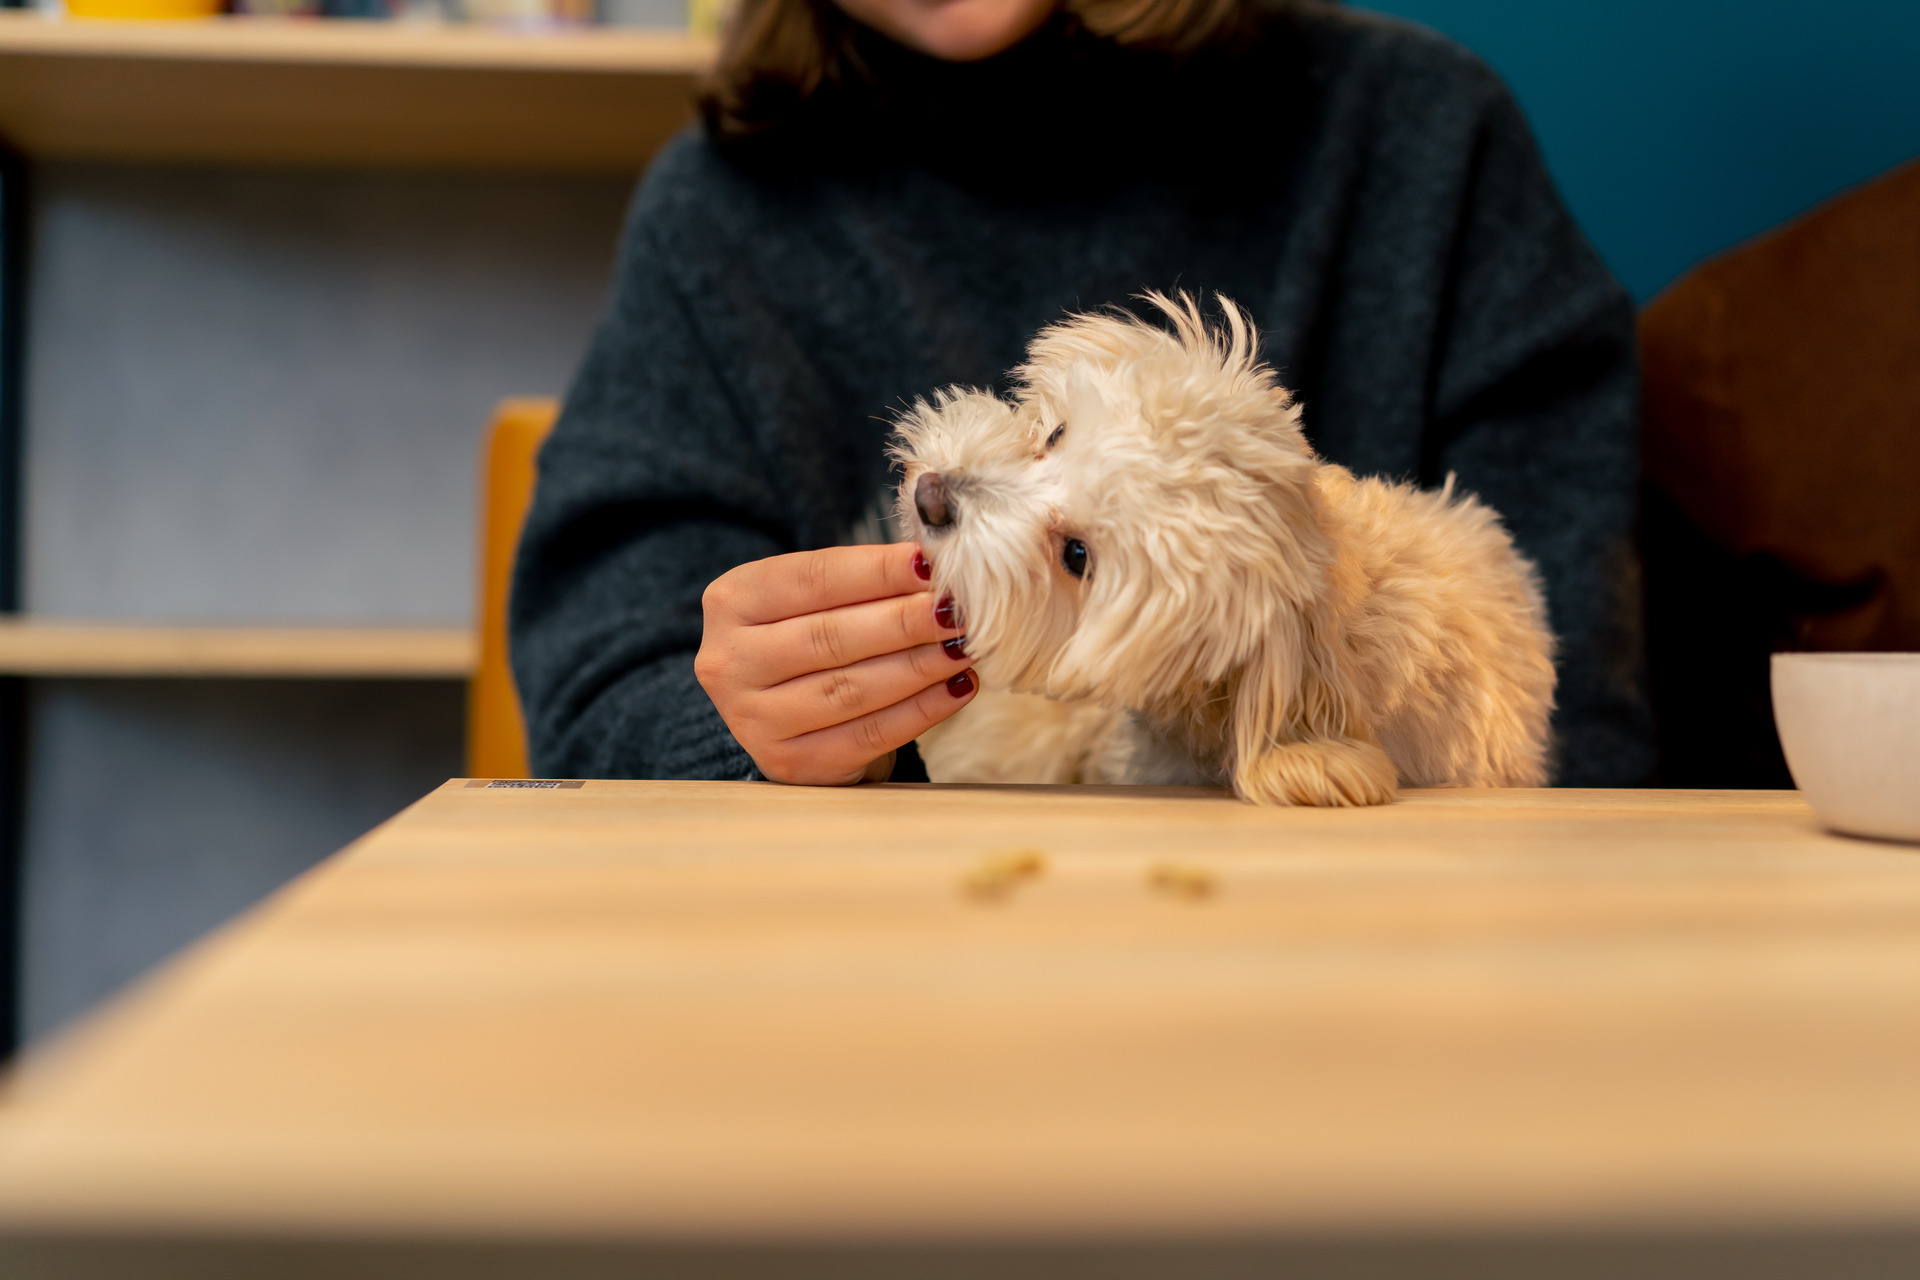 A woman feeding a small white dog a treat